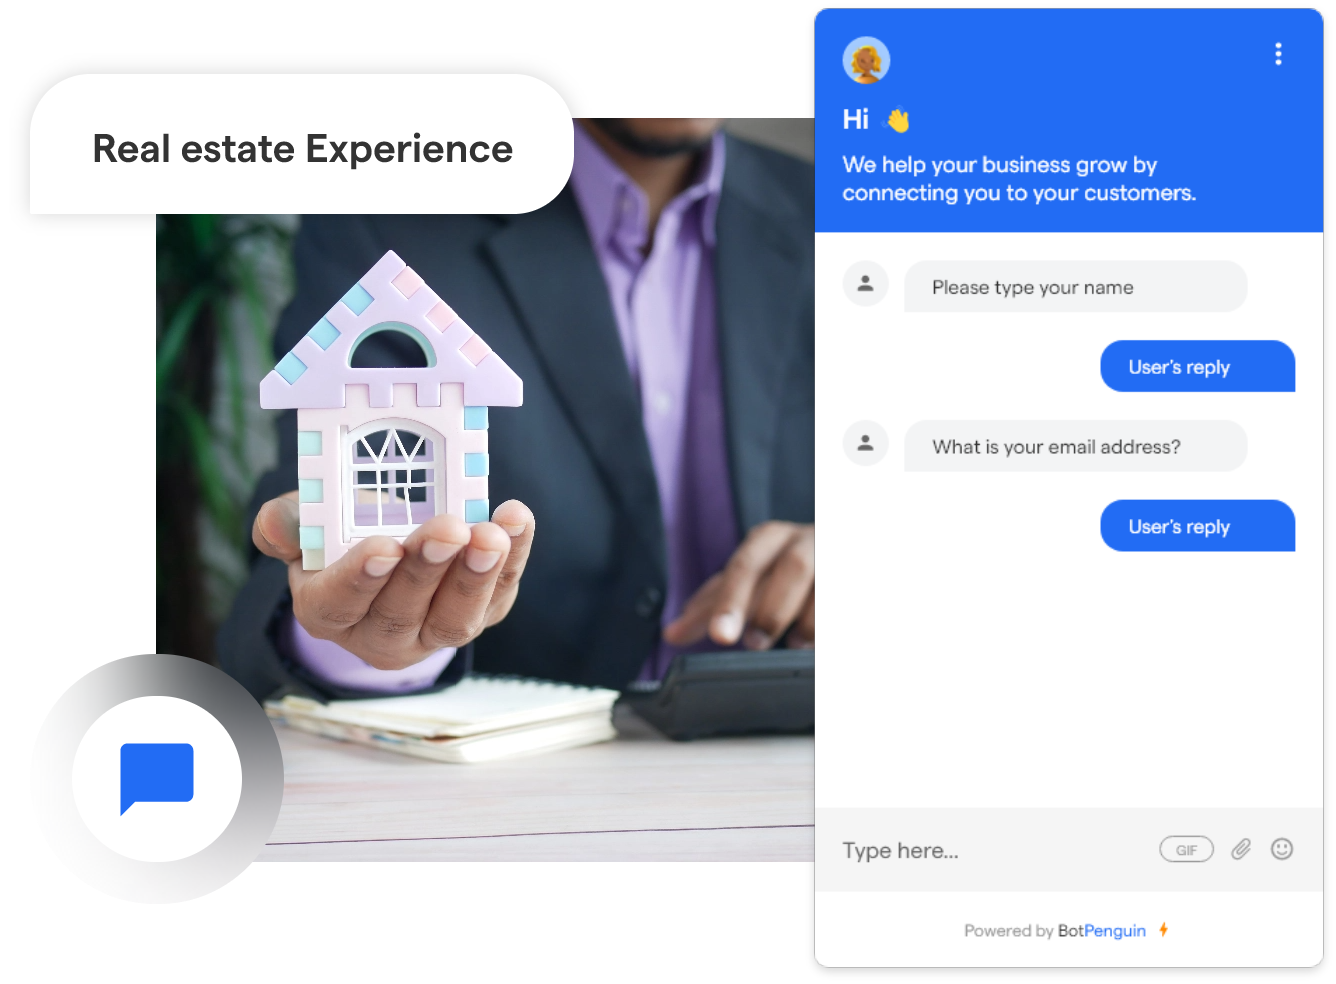 chatbot for real estate